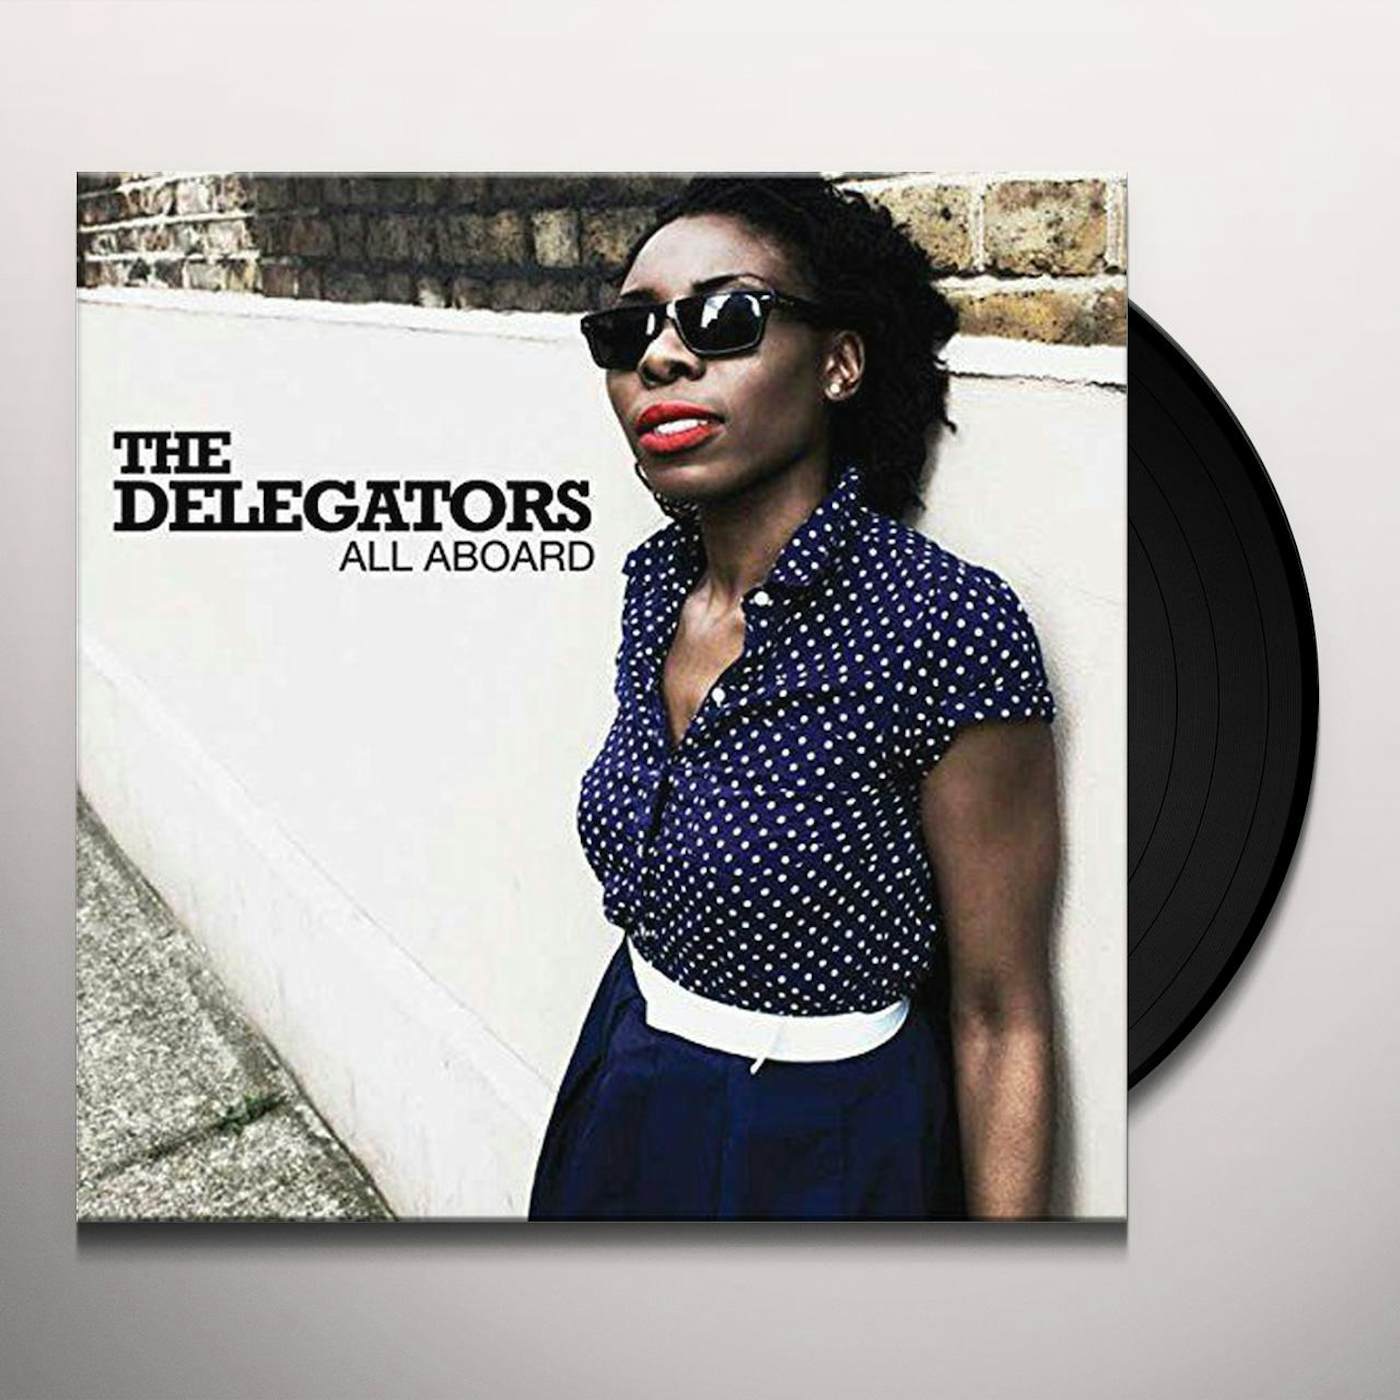 The Delegators All aboard Vinyl Record